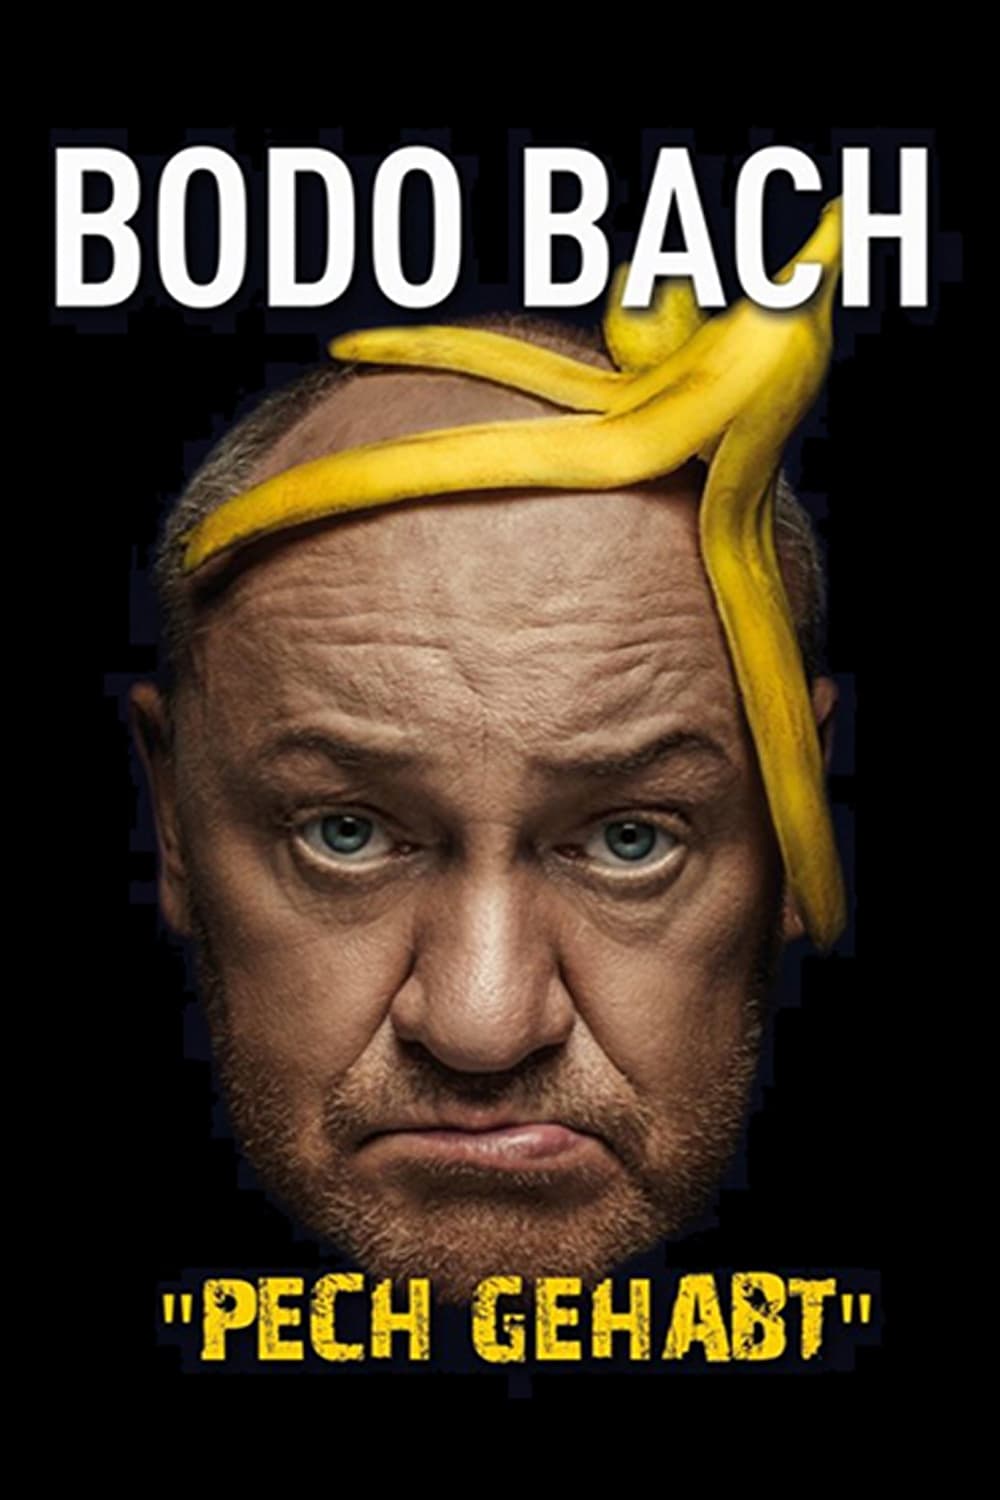 Bodo Bach live - Pech gehabt